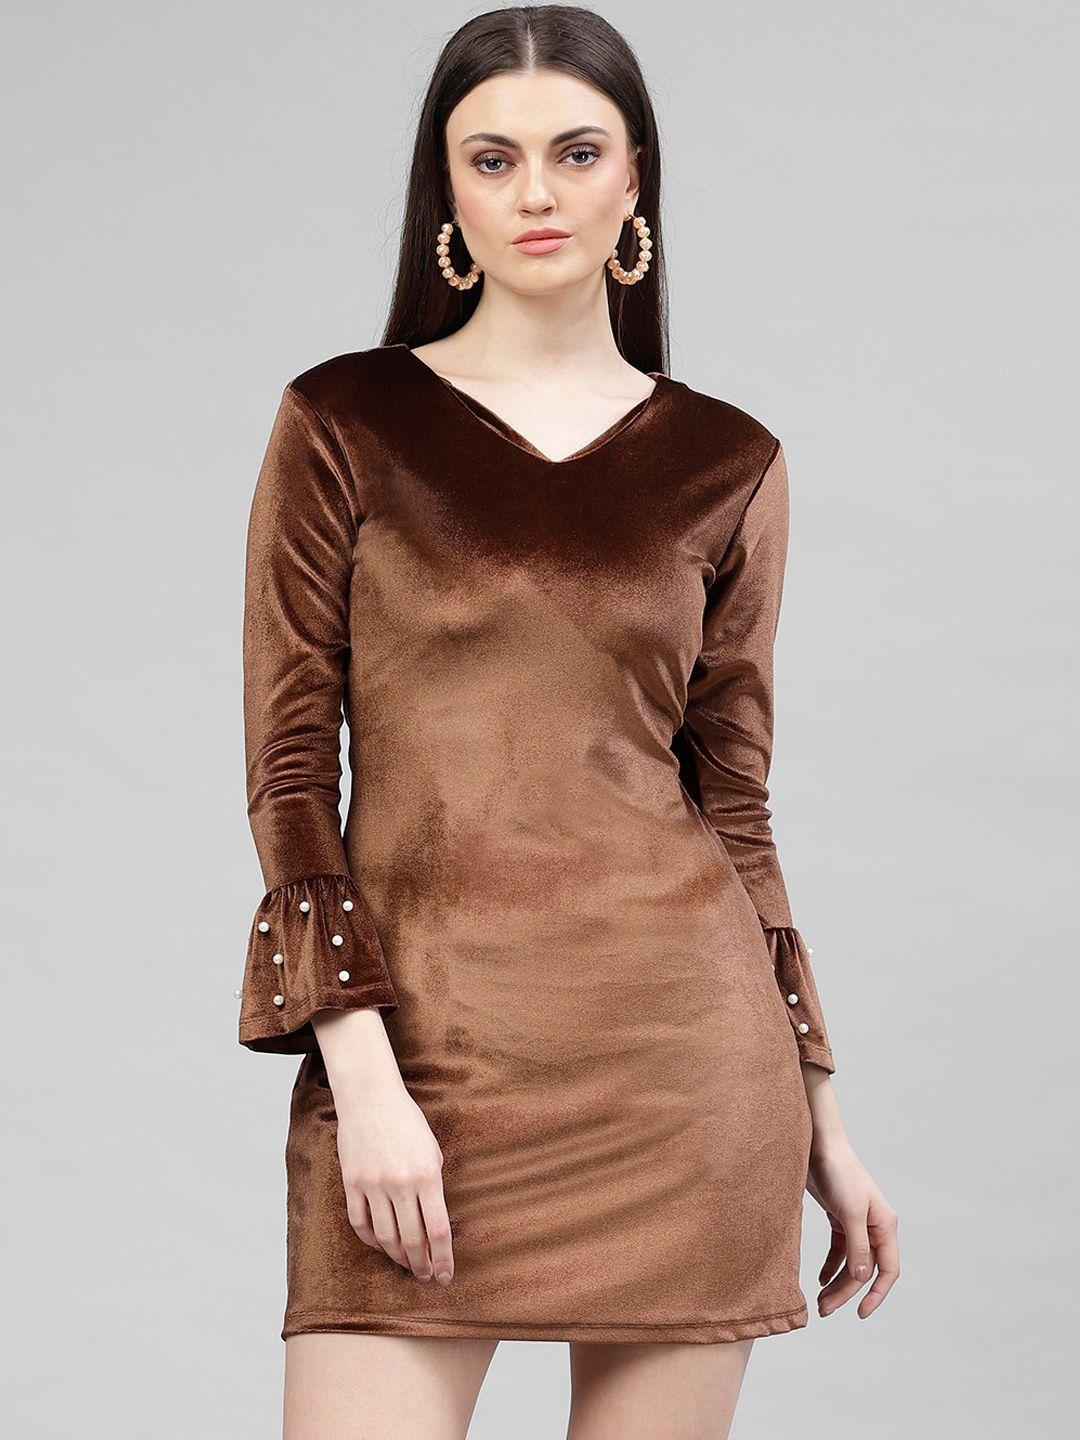 kassually women brown solid sheath dress